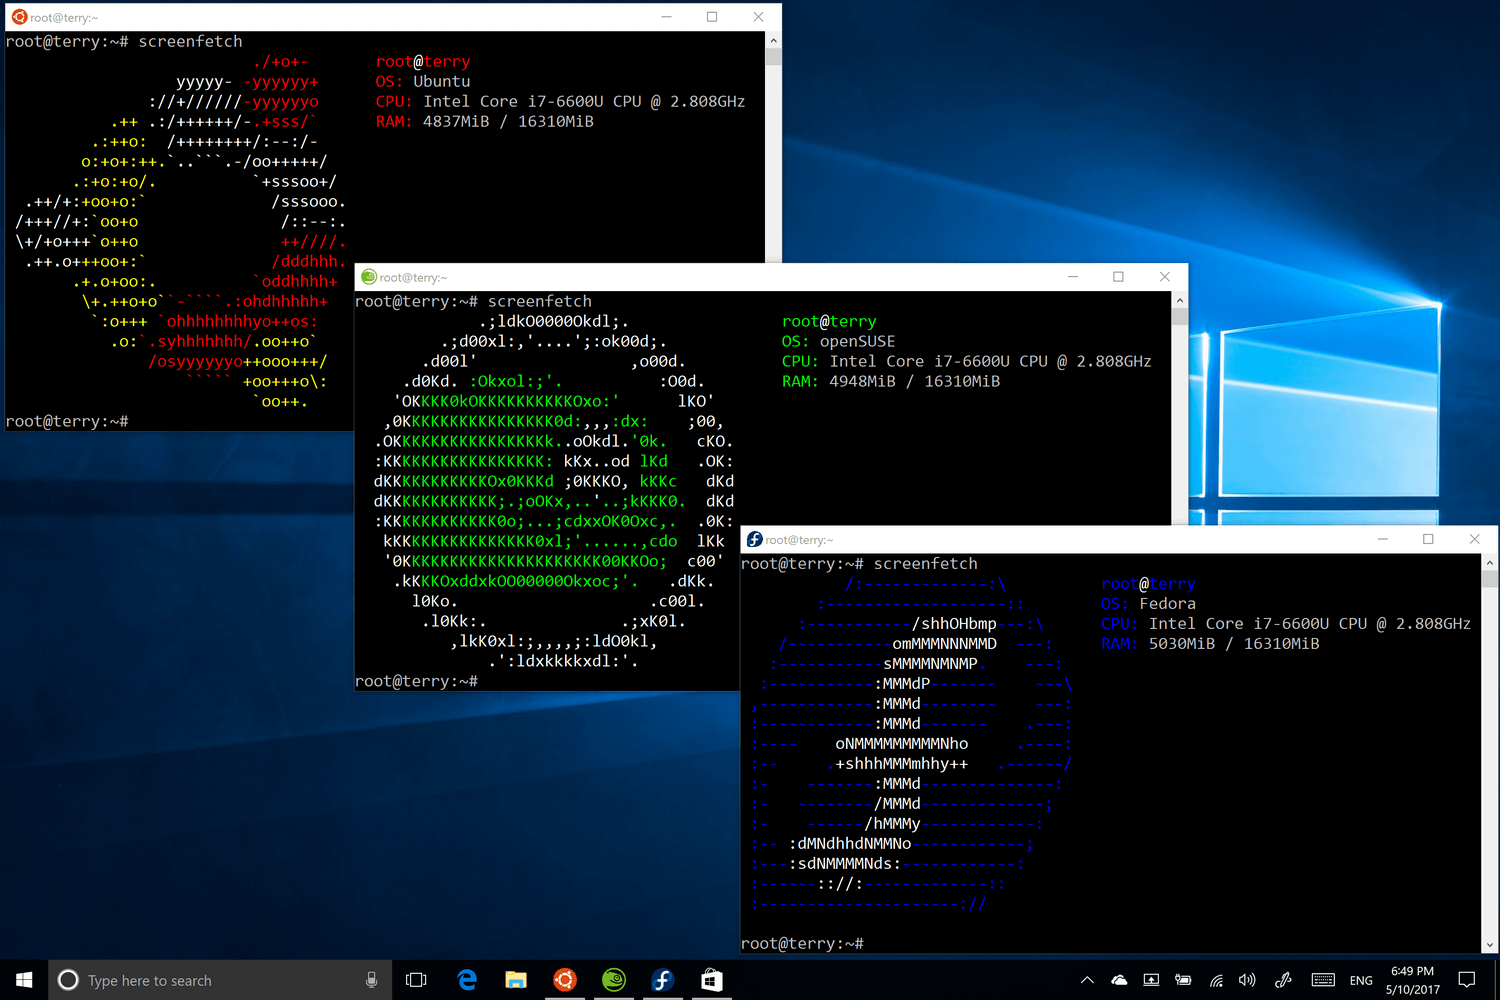 windows-10-fall-creators-update-linux.png